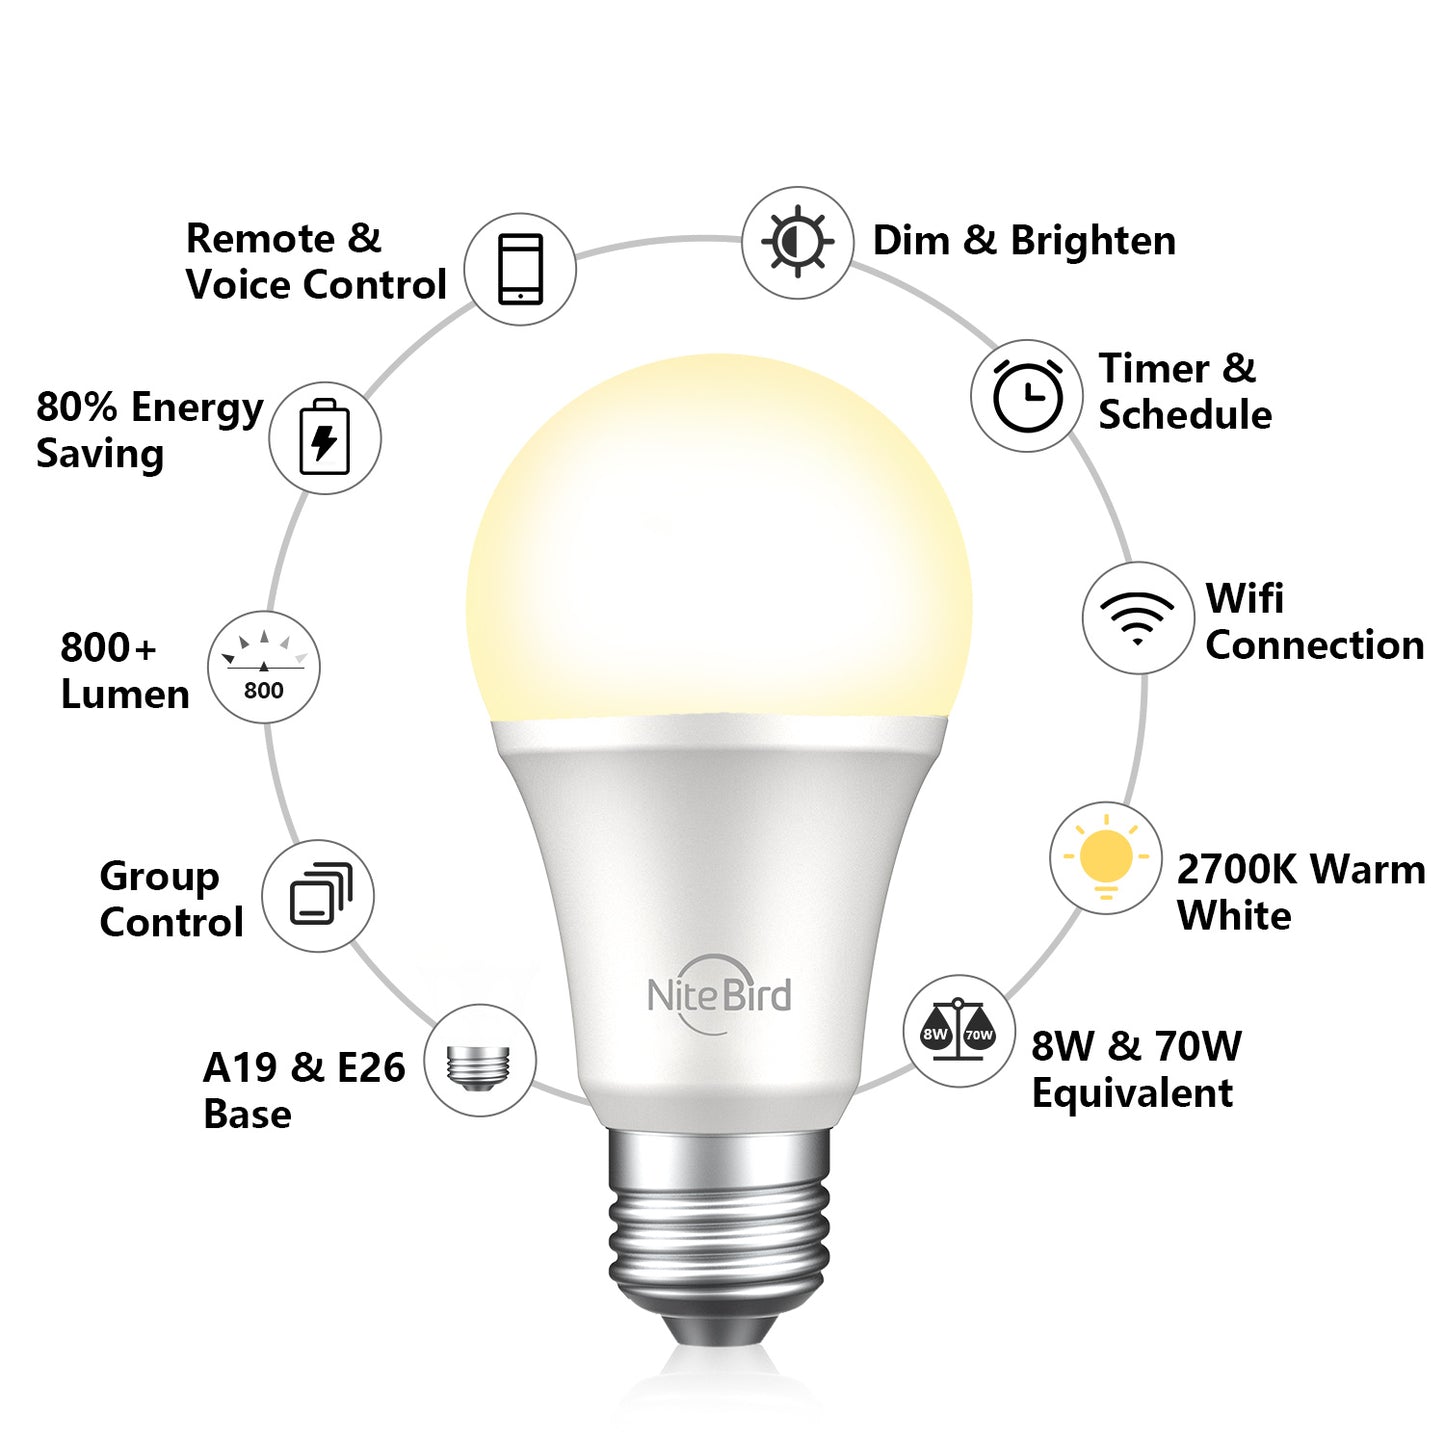 NiteBird Smart Bulb LB1-1-US